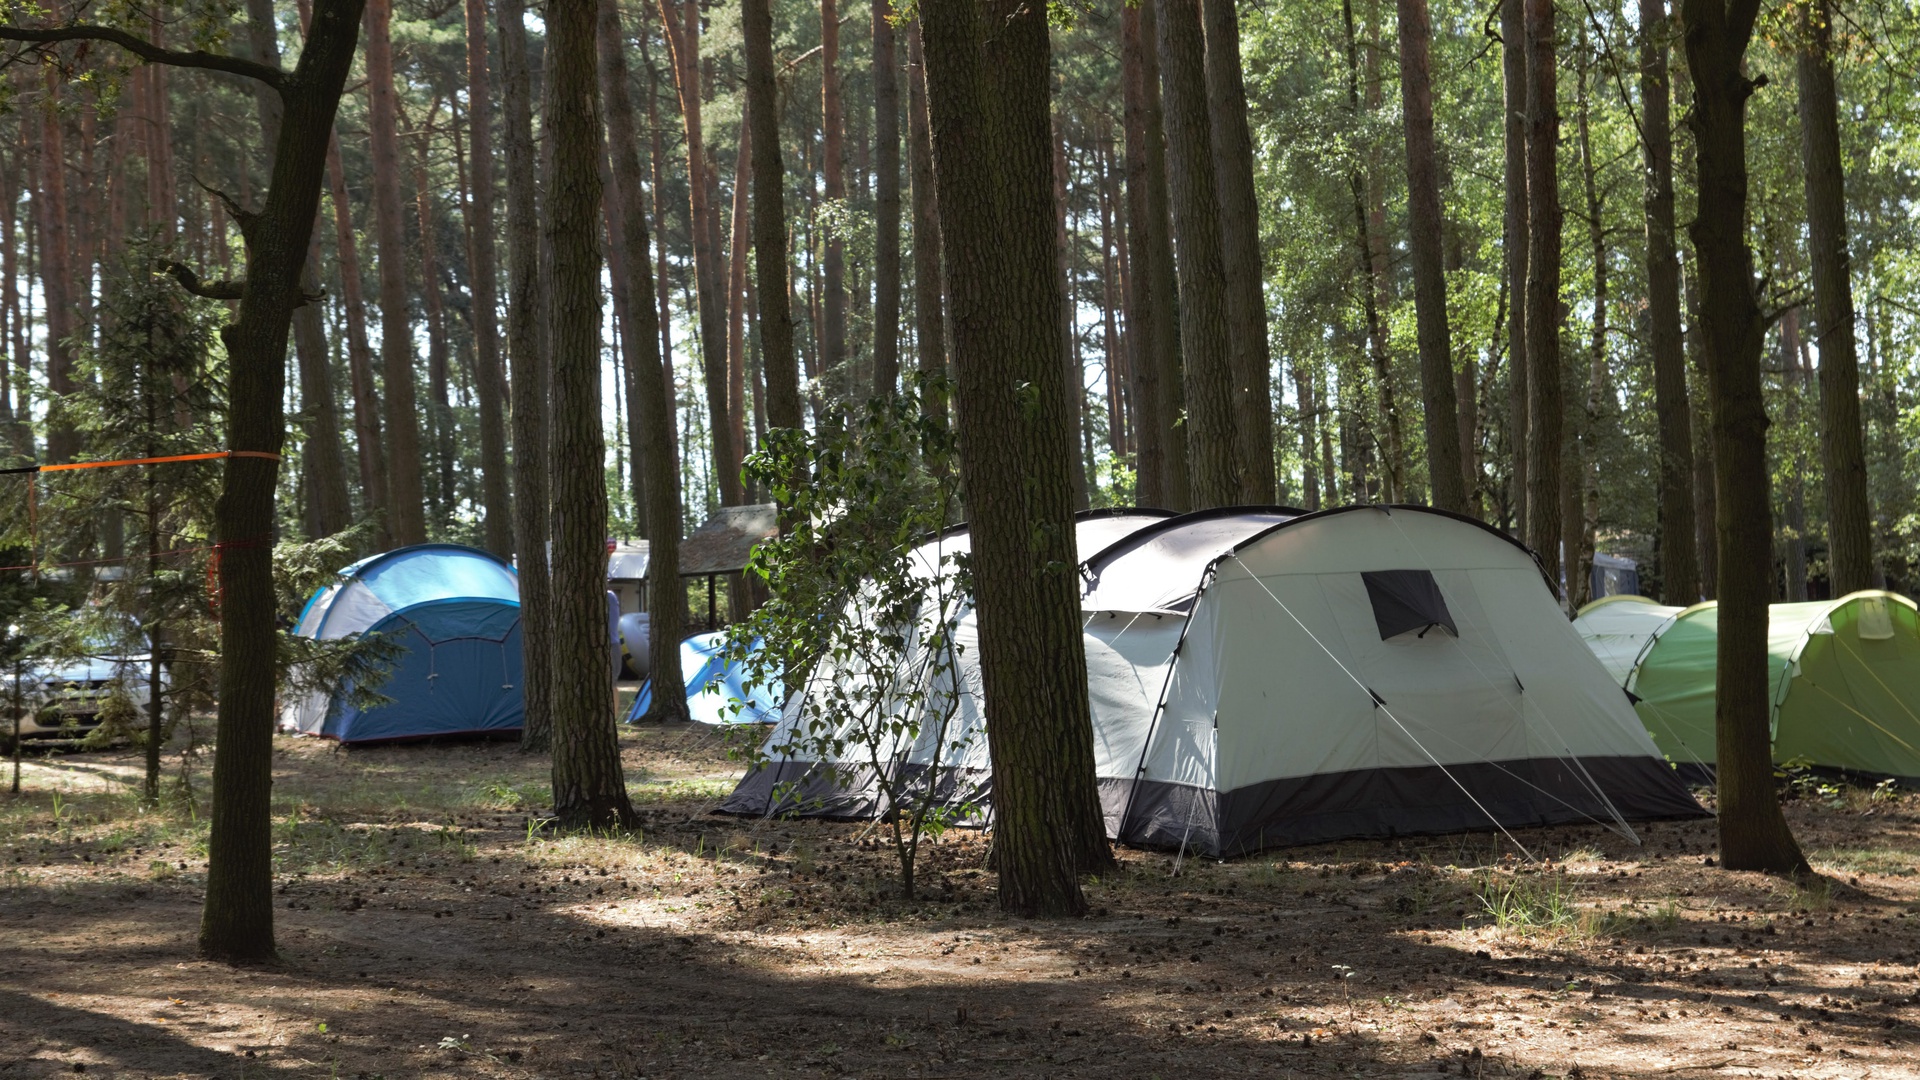 Wa-Ca-Wi     Waldbad-Campingplatz-Wischer